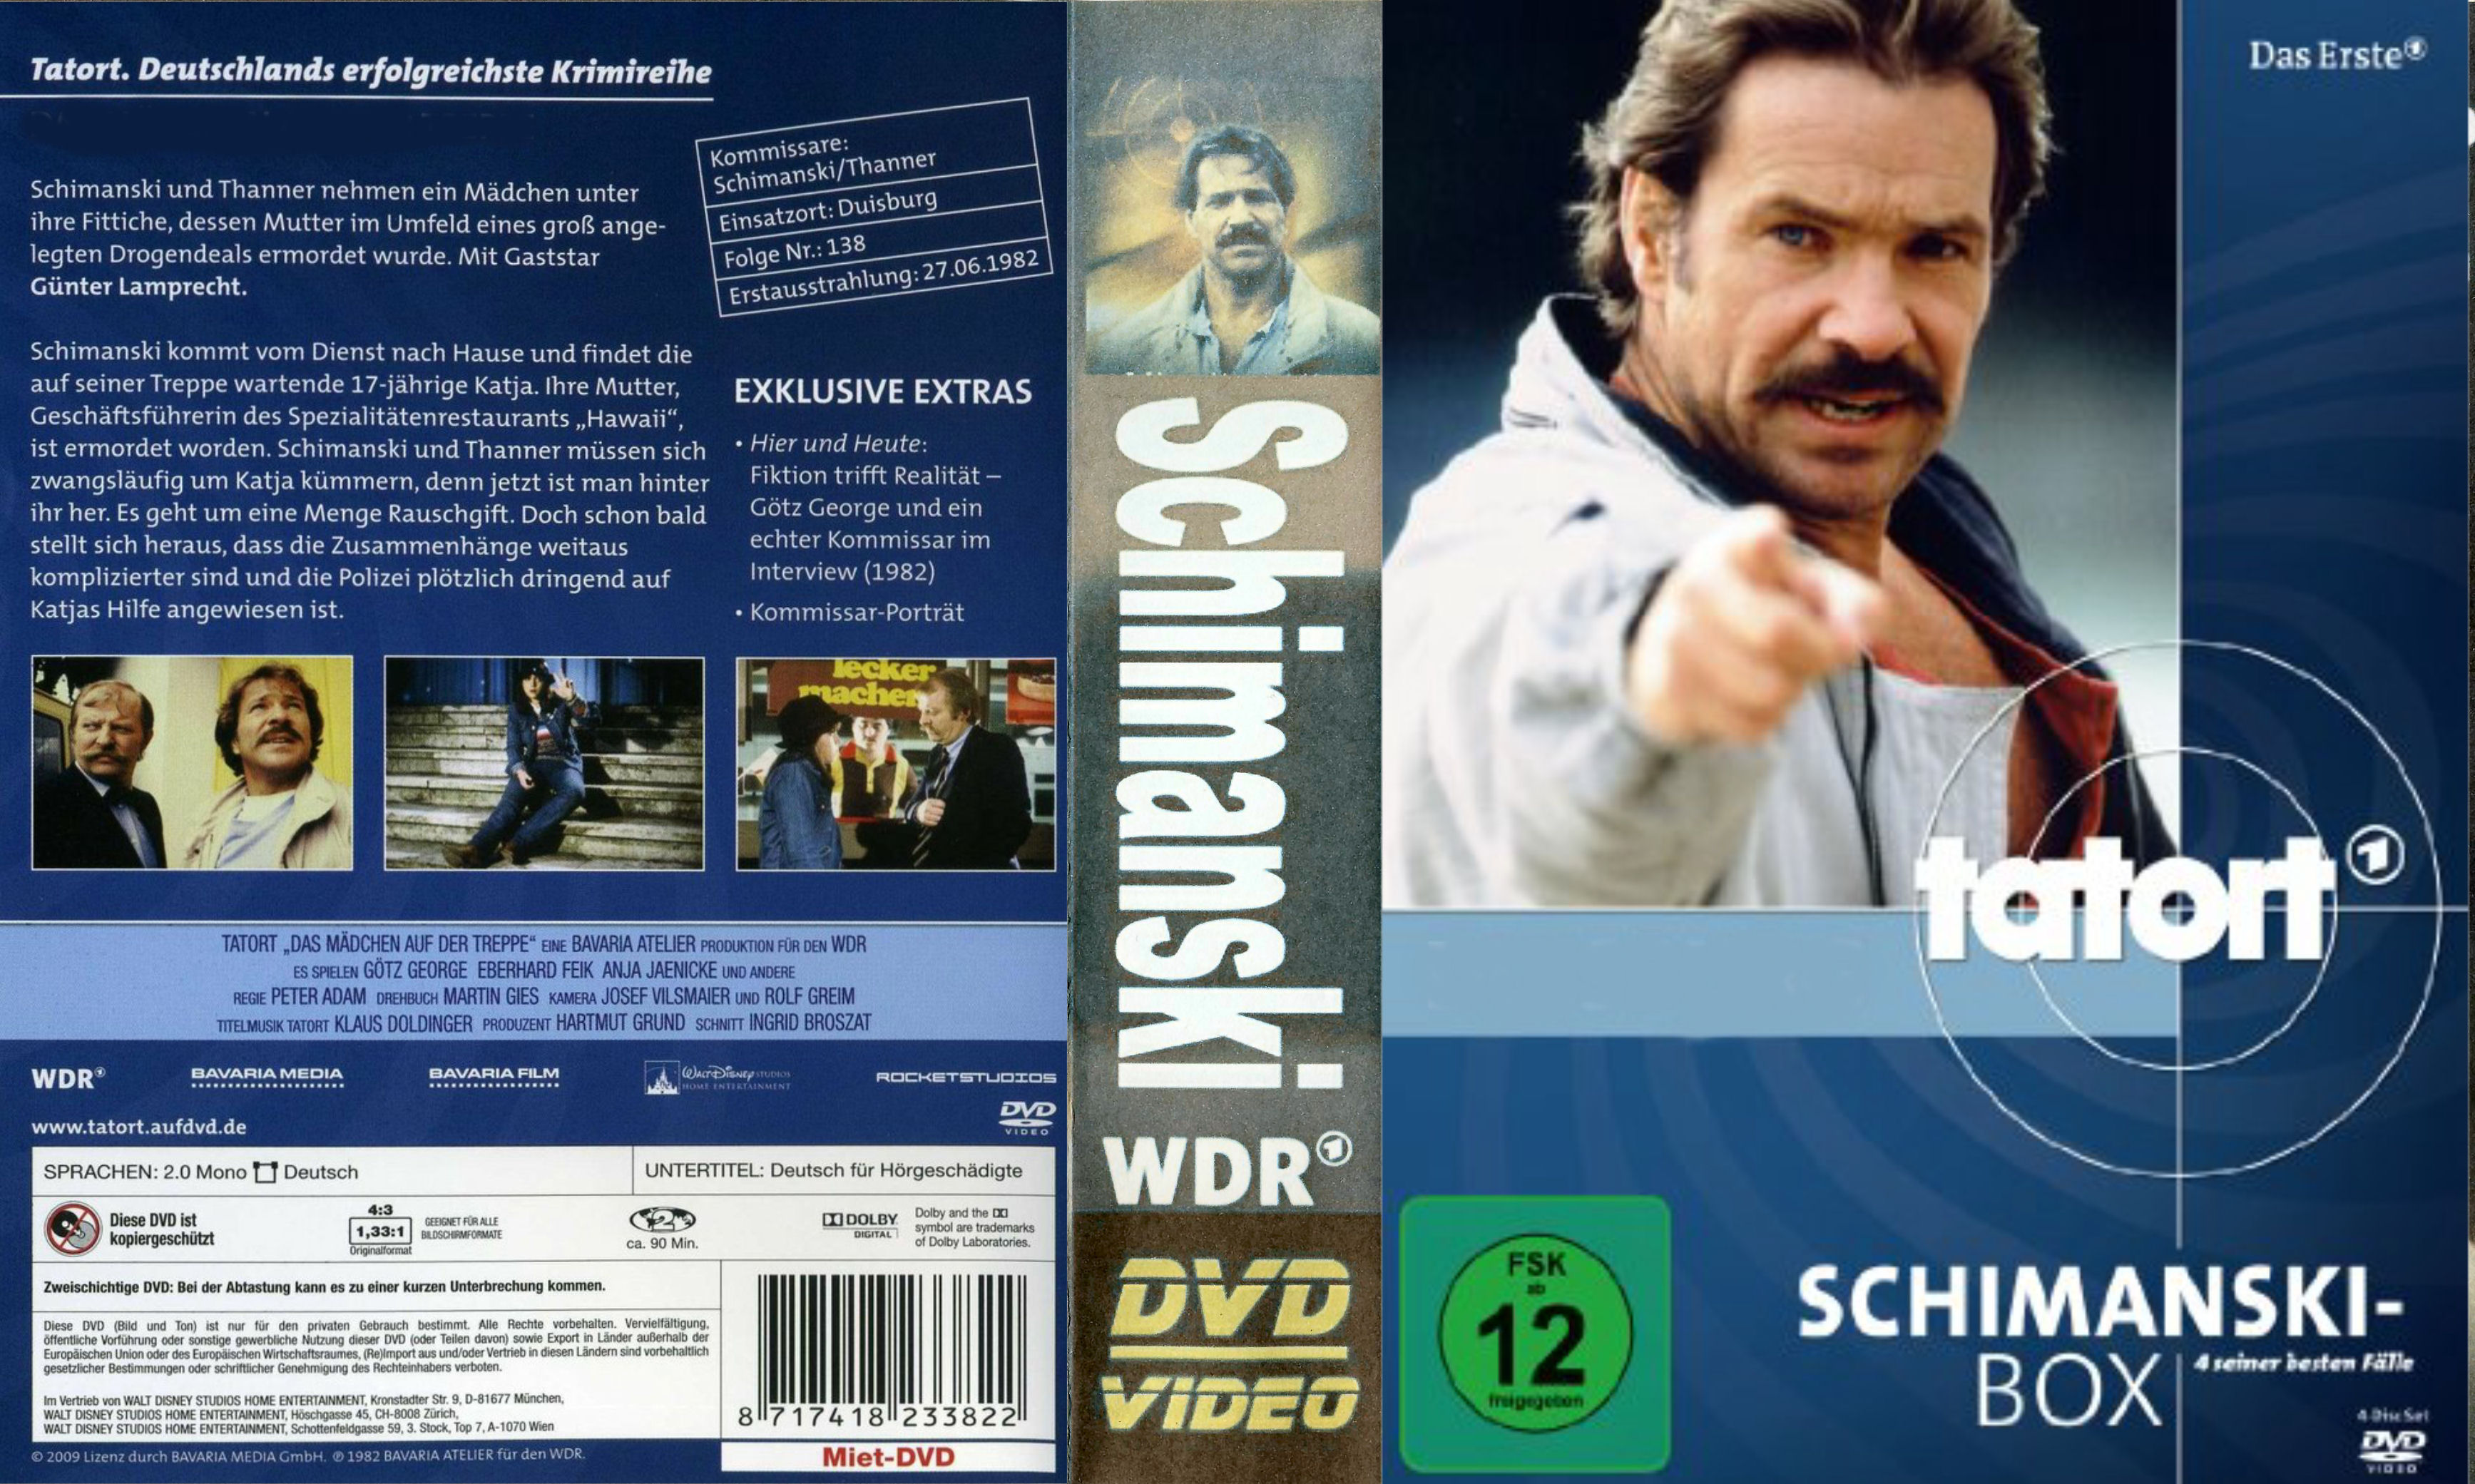 Schimanski Collectie Tatort No Subs - DvD 11